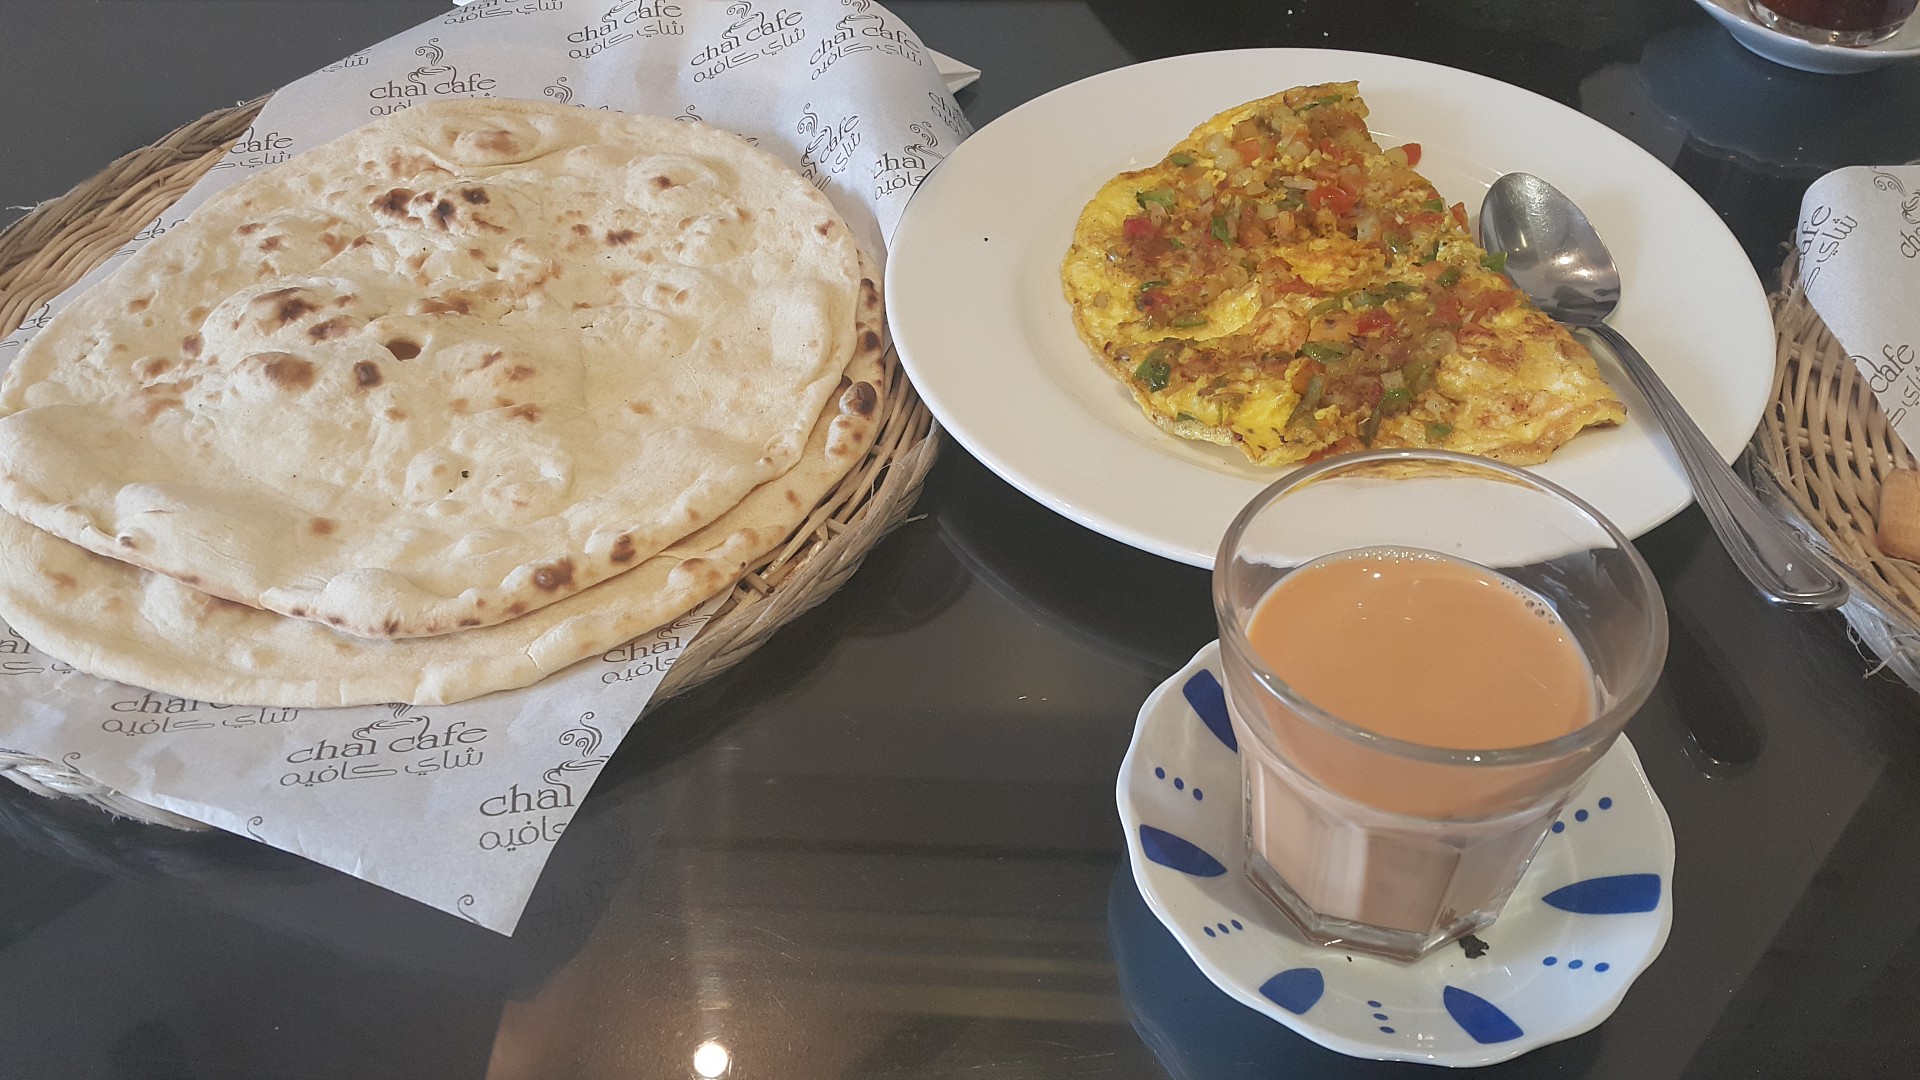 Omelet and karak tea
#Breakfast @ Chai Cafe - Bahrain